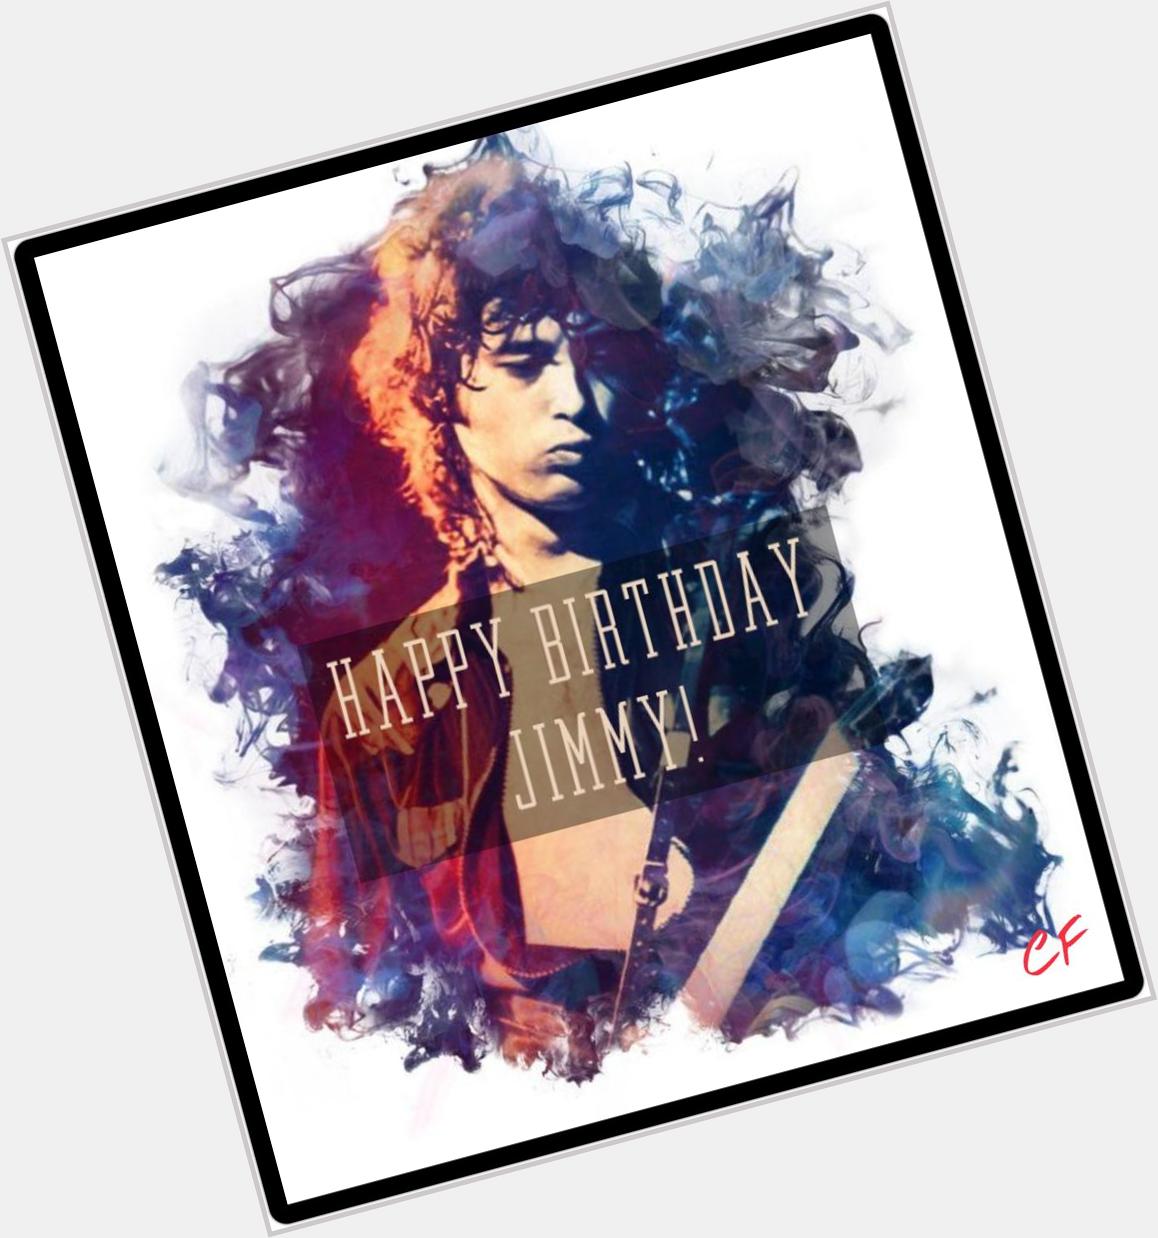   Happy Birthday Master Jimmy Page  